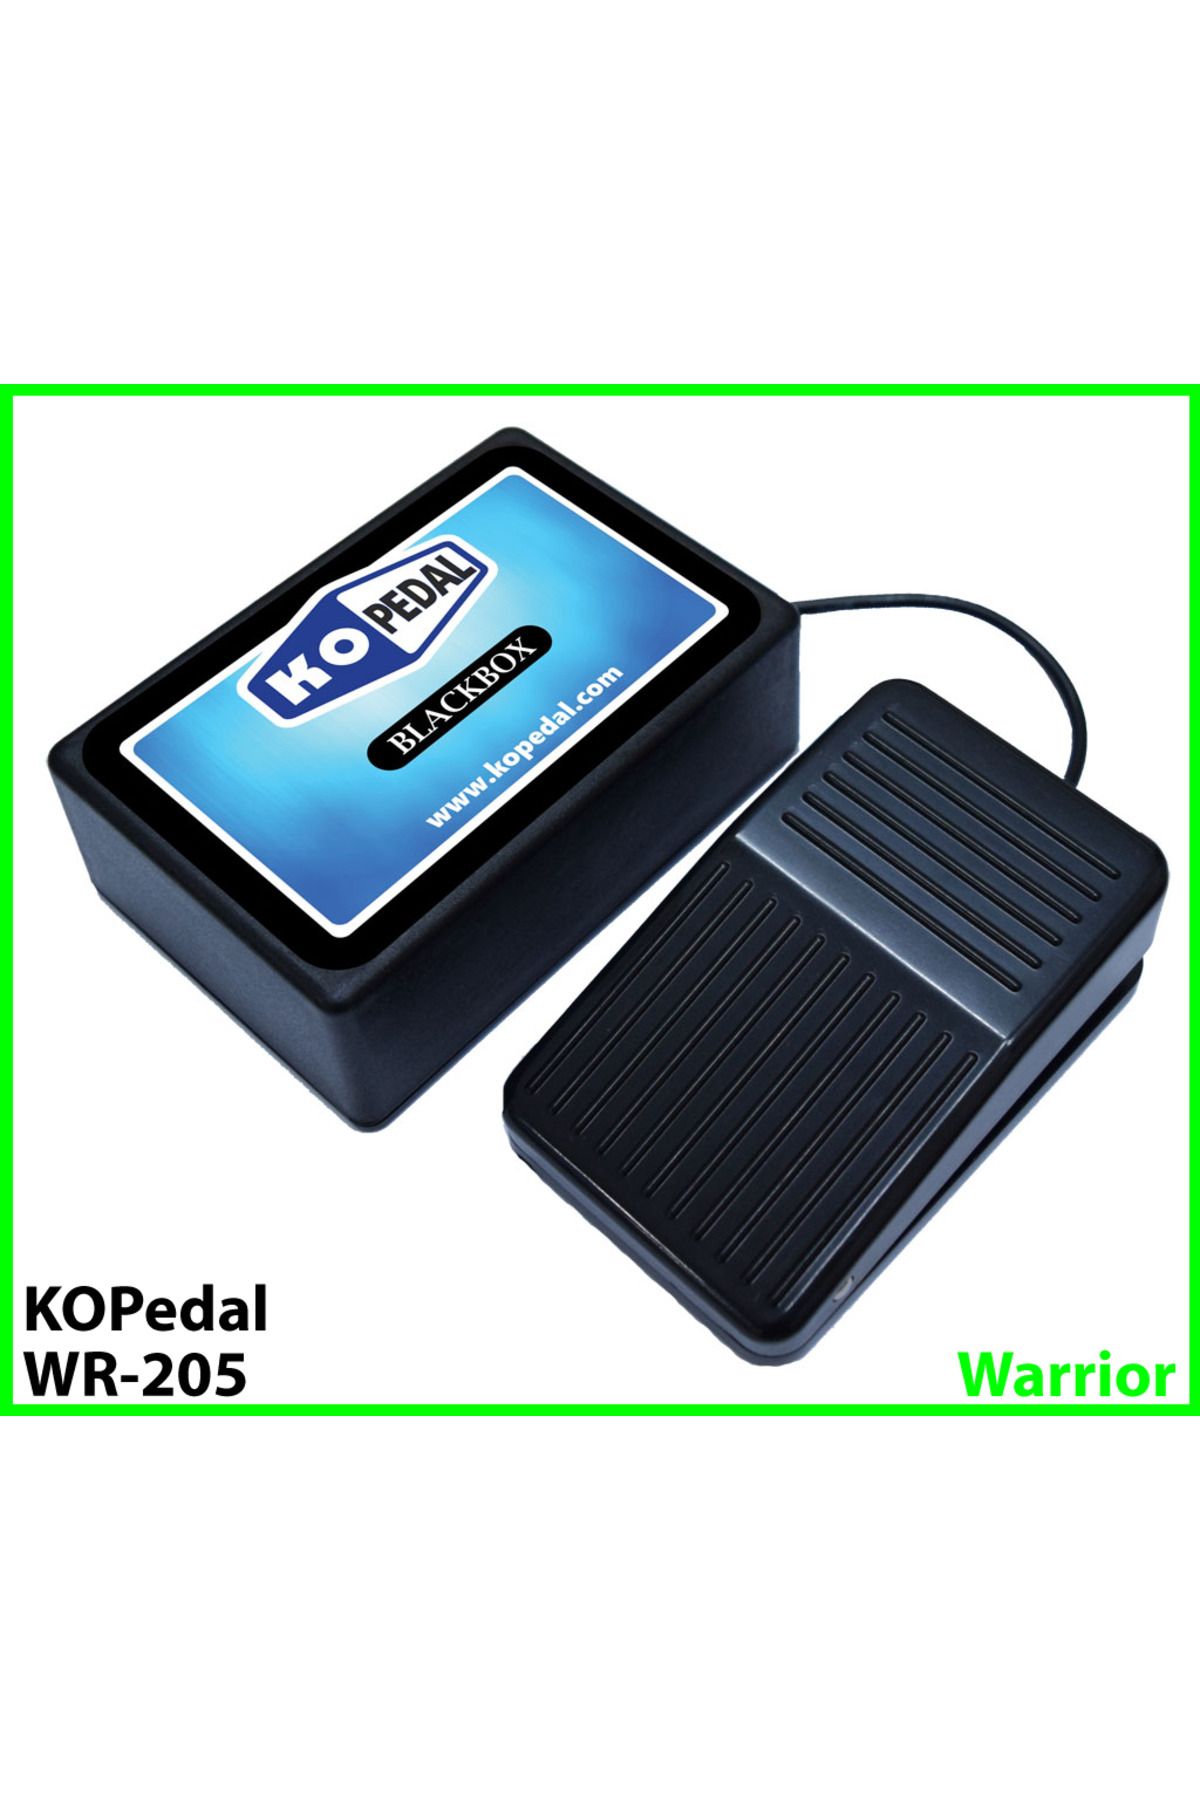 kopedal Warrior USKO/PVP Berserker Pedal WR-205